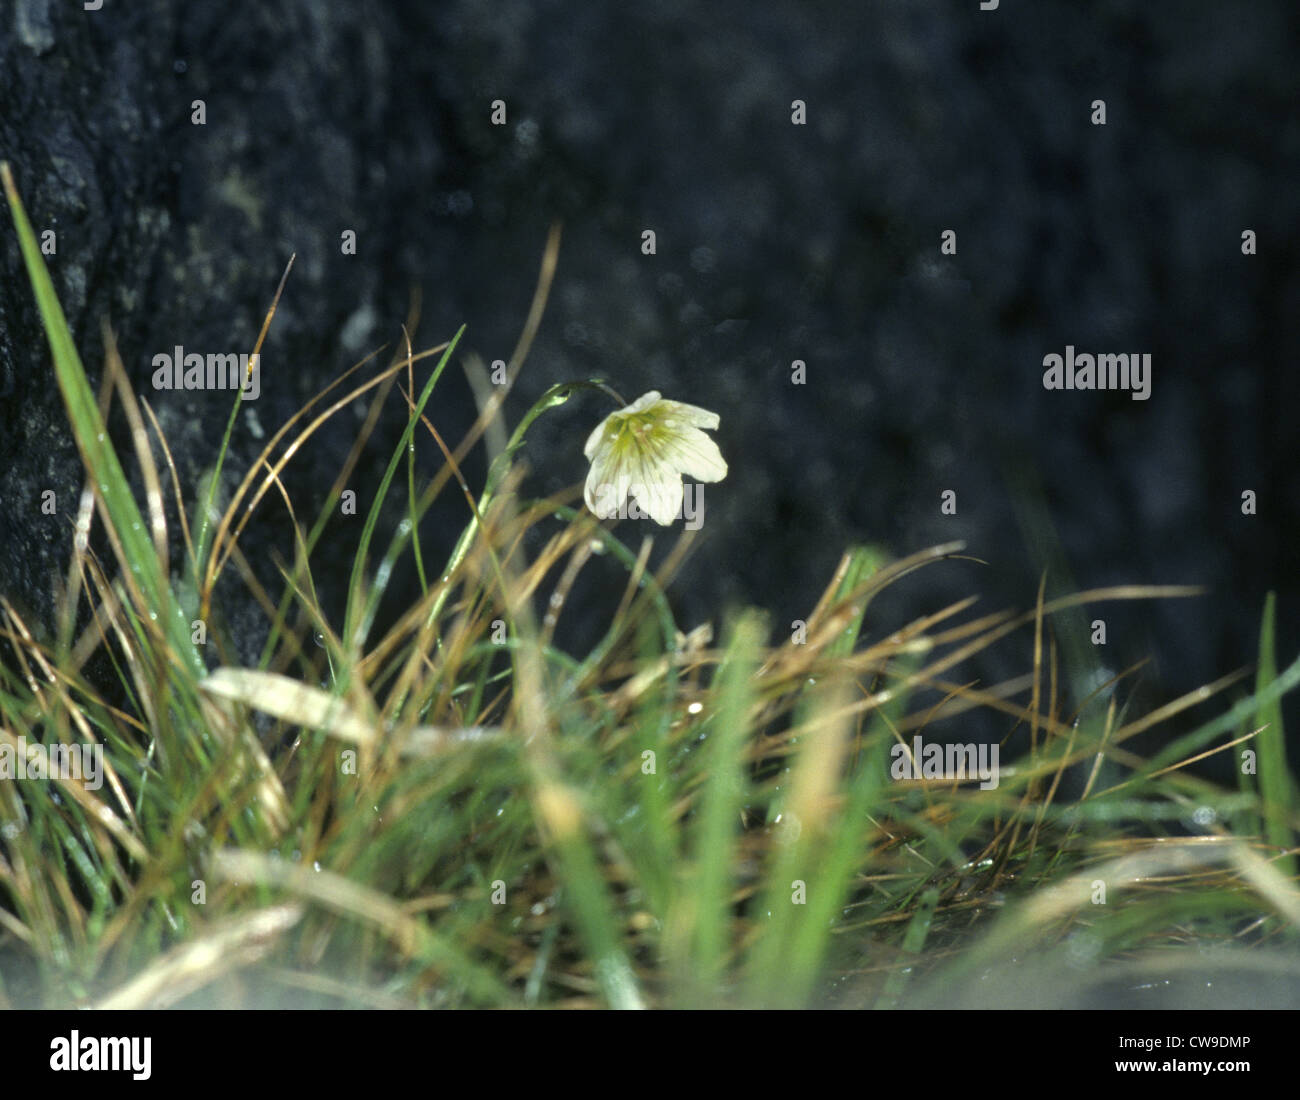 Snowdon Lily (Lloydia serotina) Stock Photo